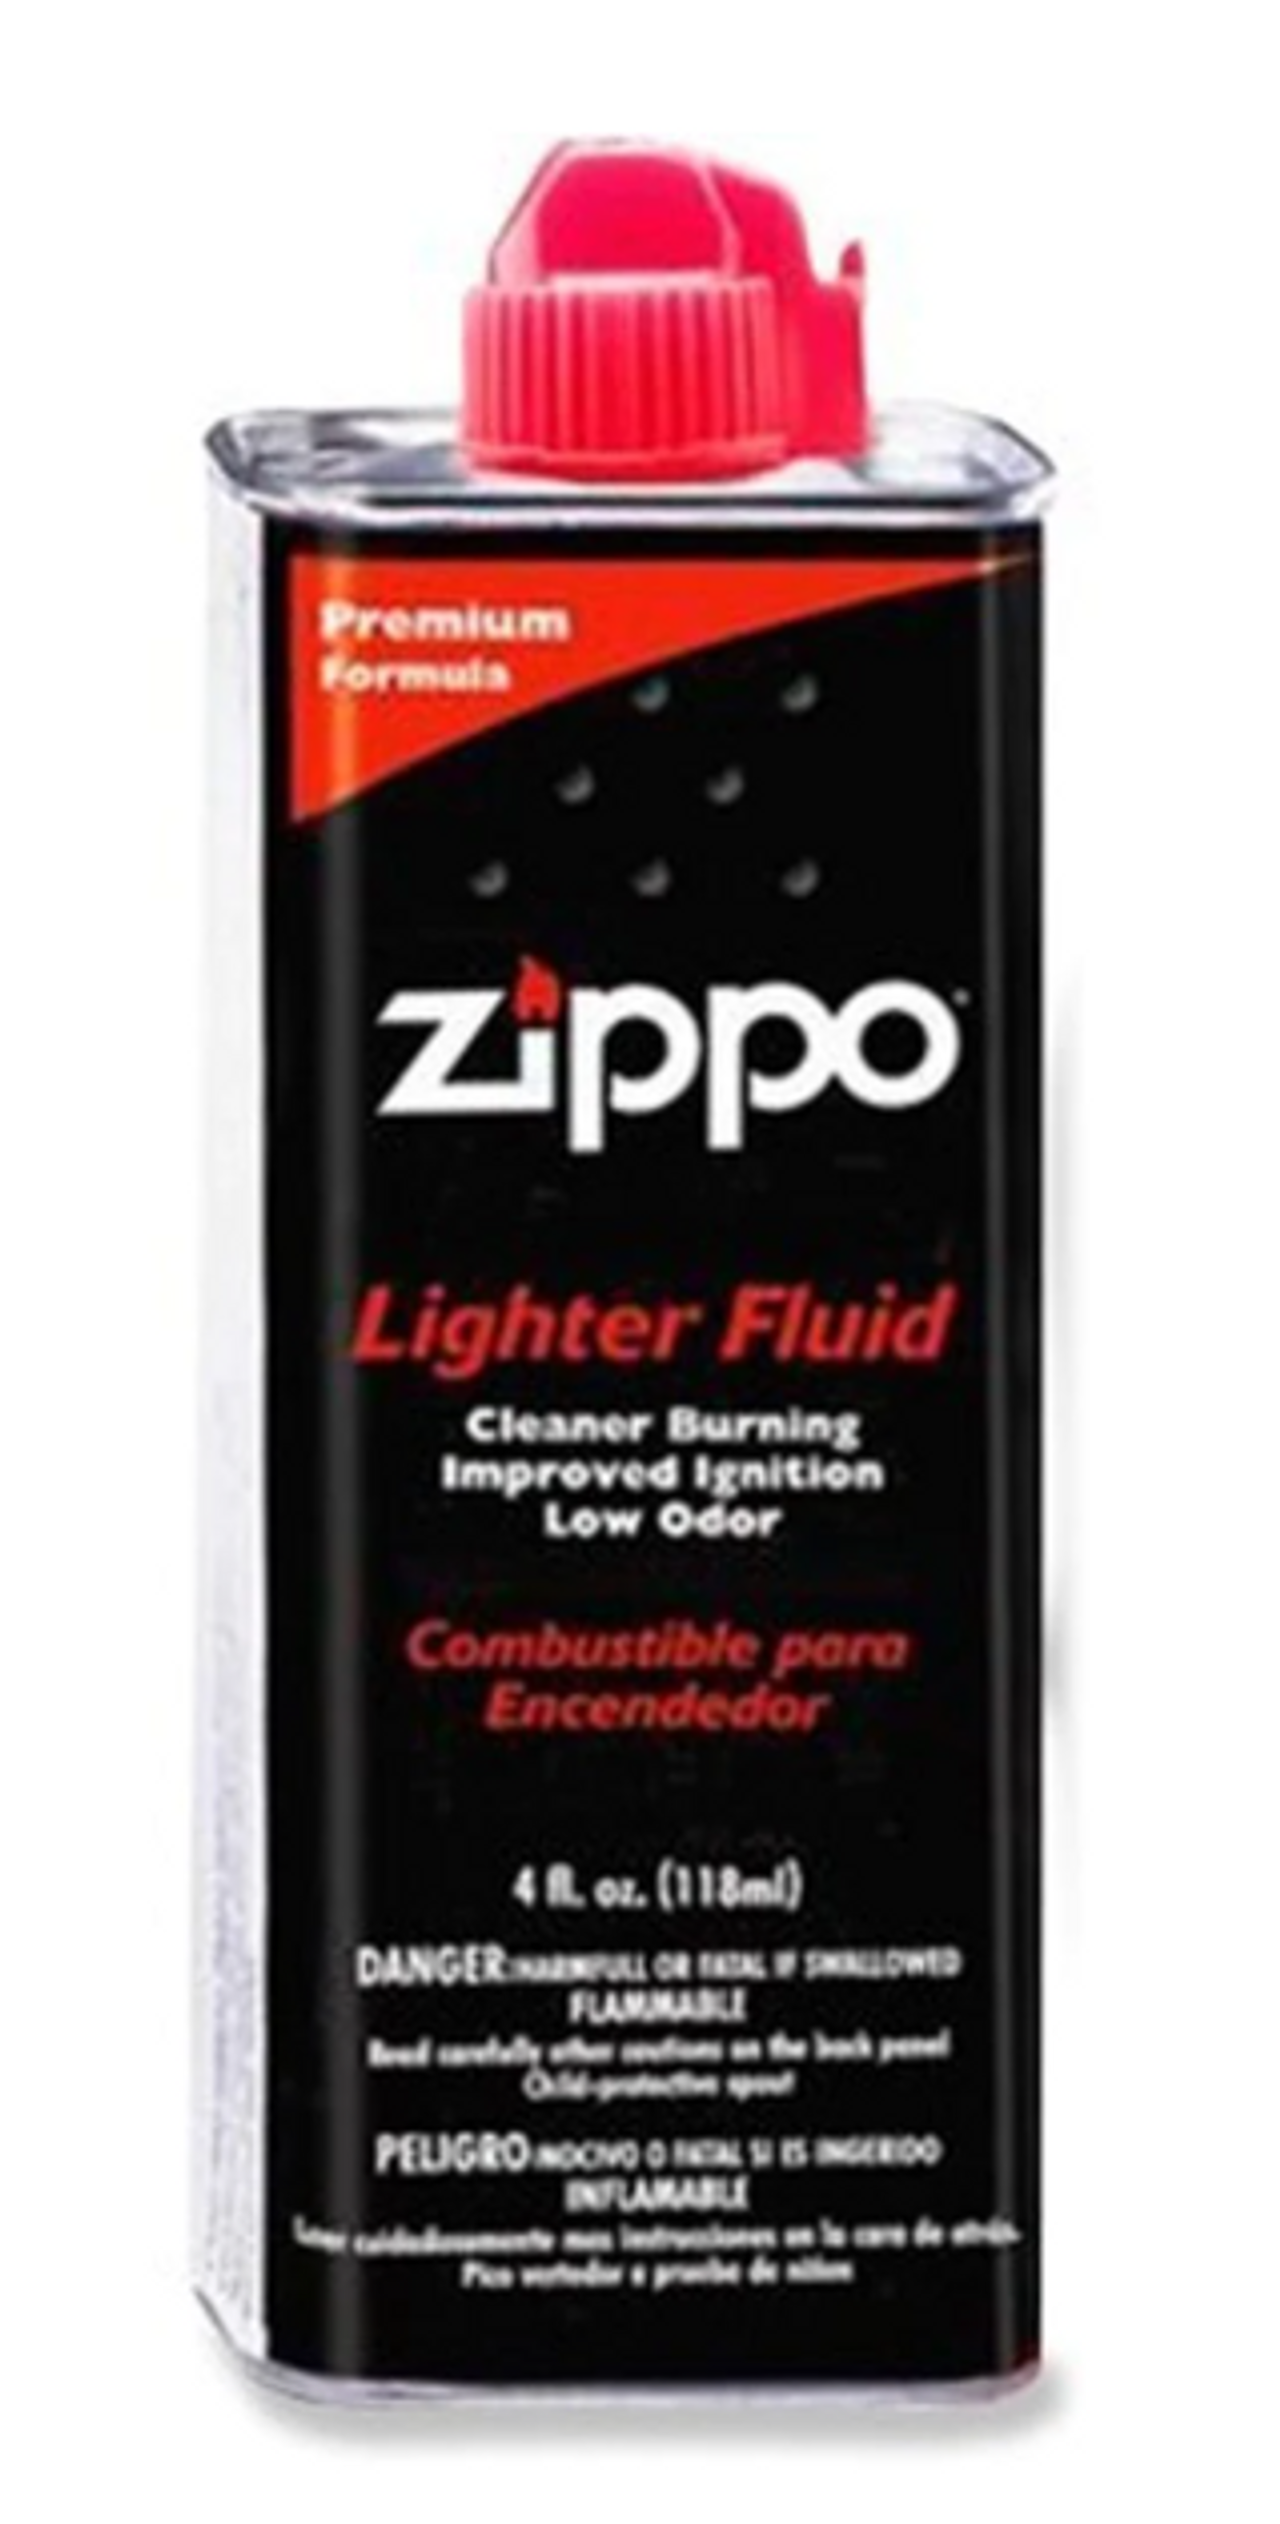 12 oz zippo lighter fluid